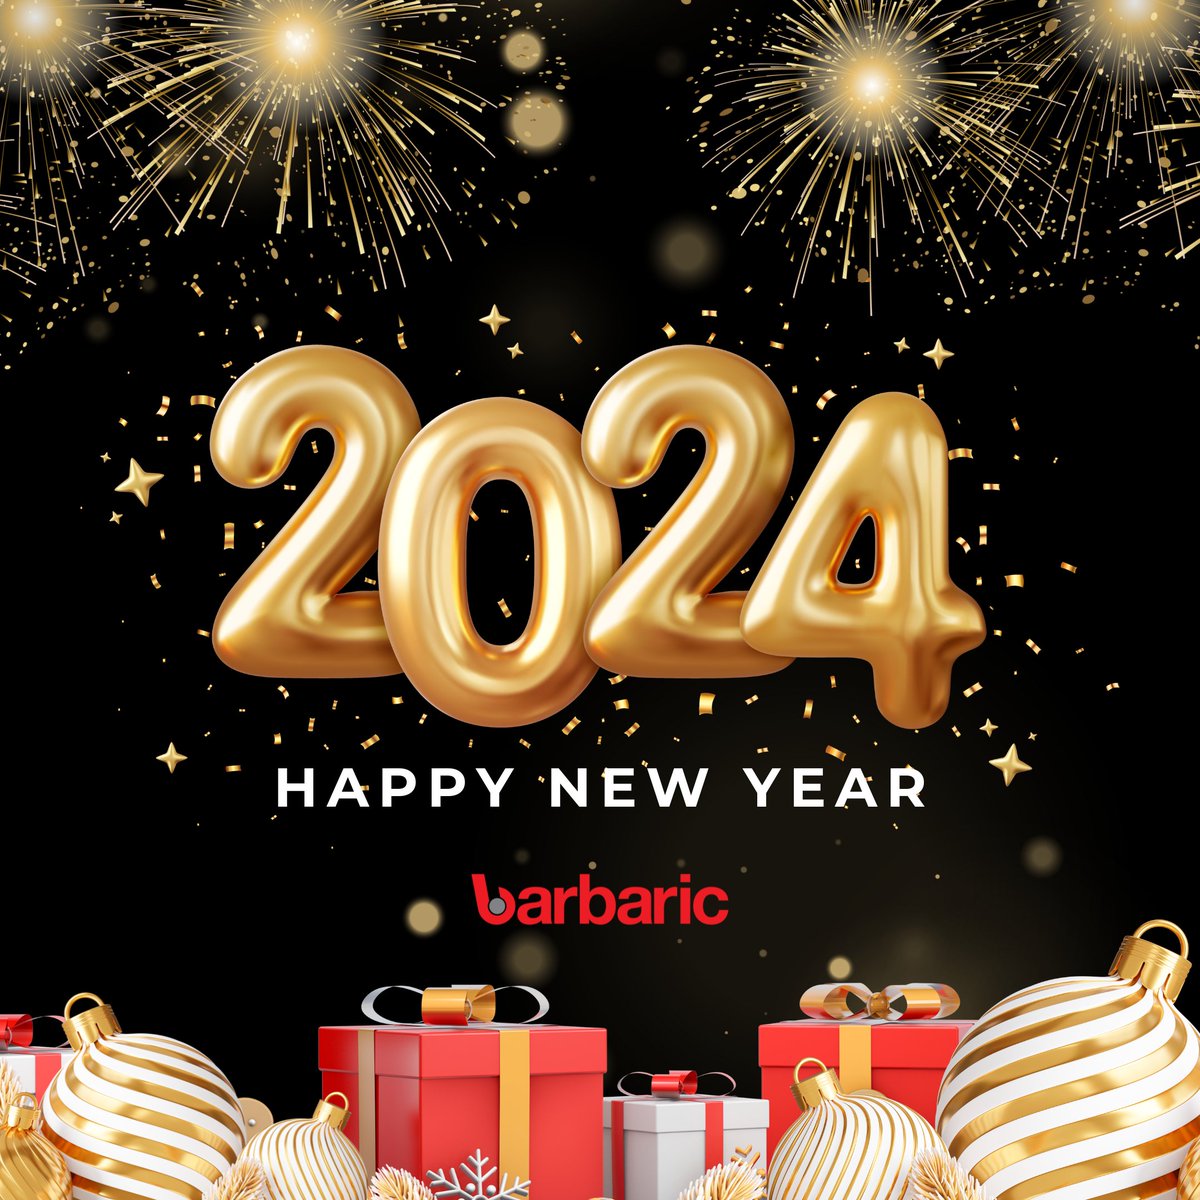 Wishing you a happy and healthy 2024! 🍾🥂

#barbaric #ideasthatmove #happynewyear2024